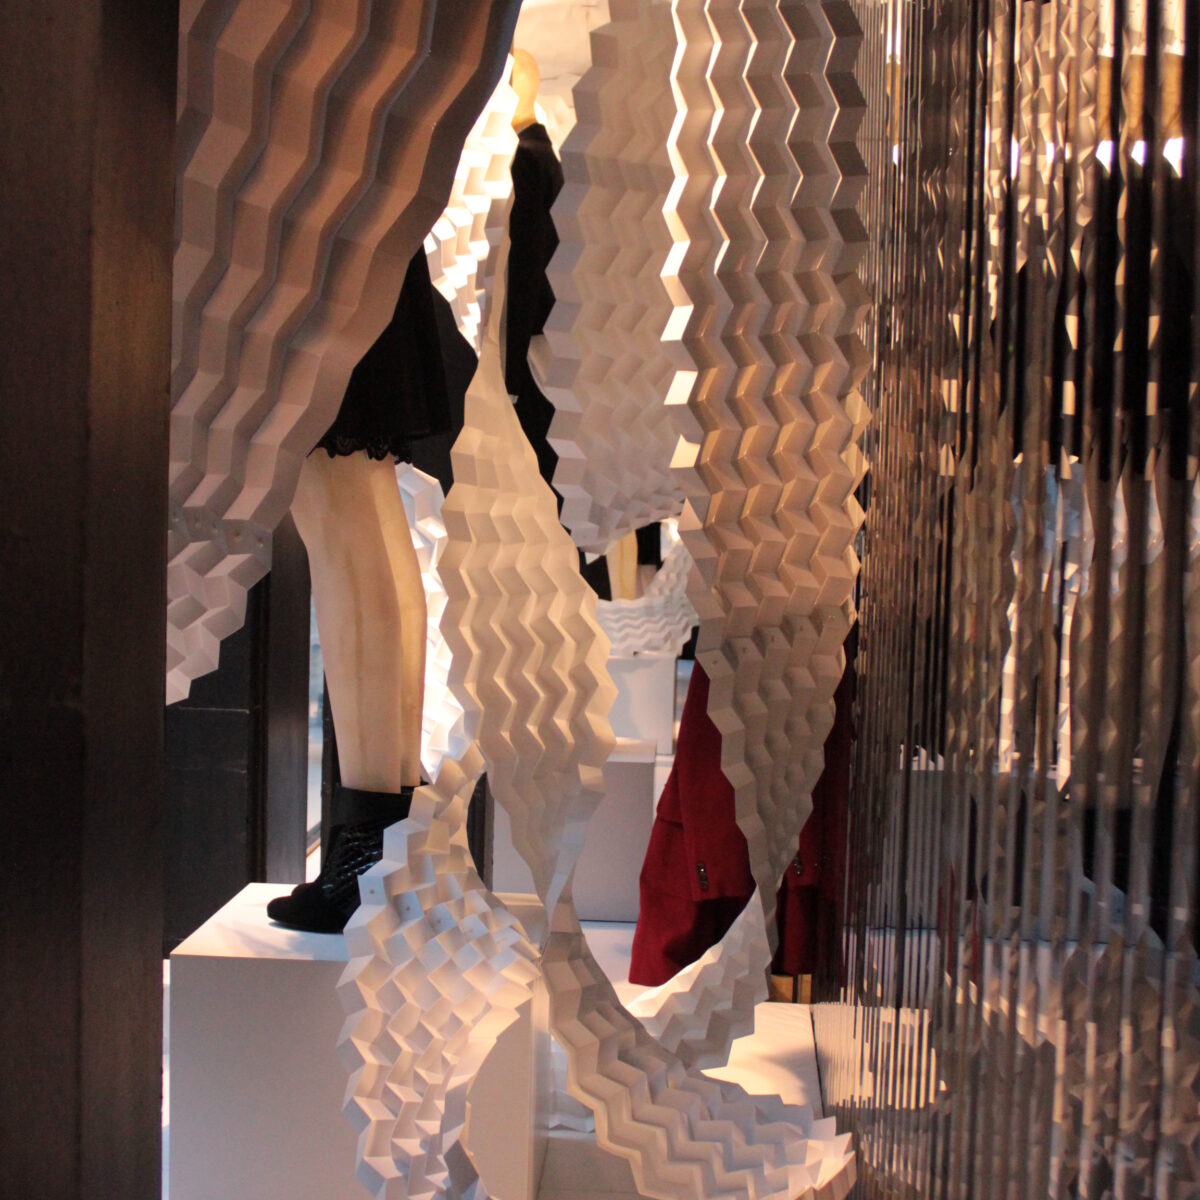 Karen Millen Mamou-Mani Origami Window Display